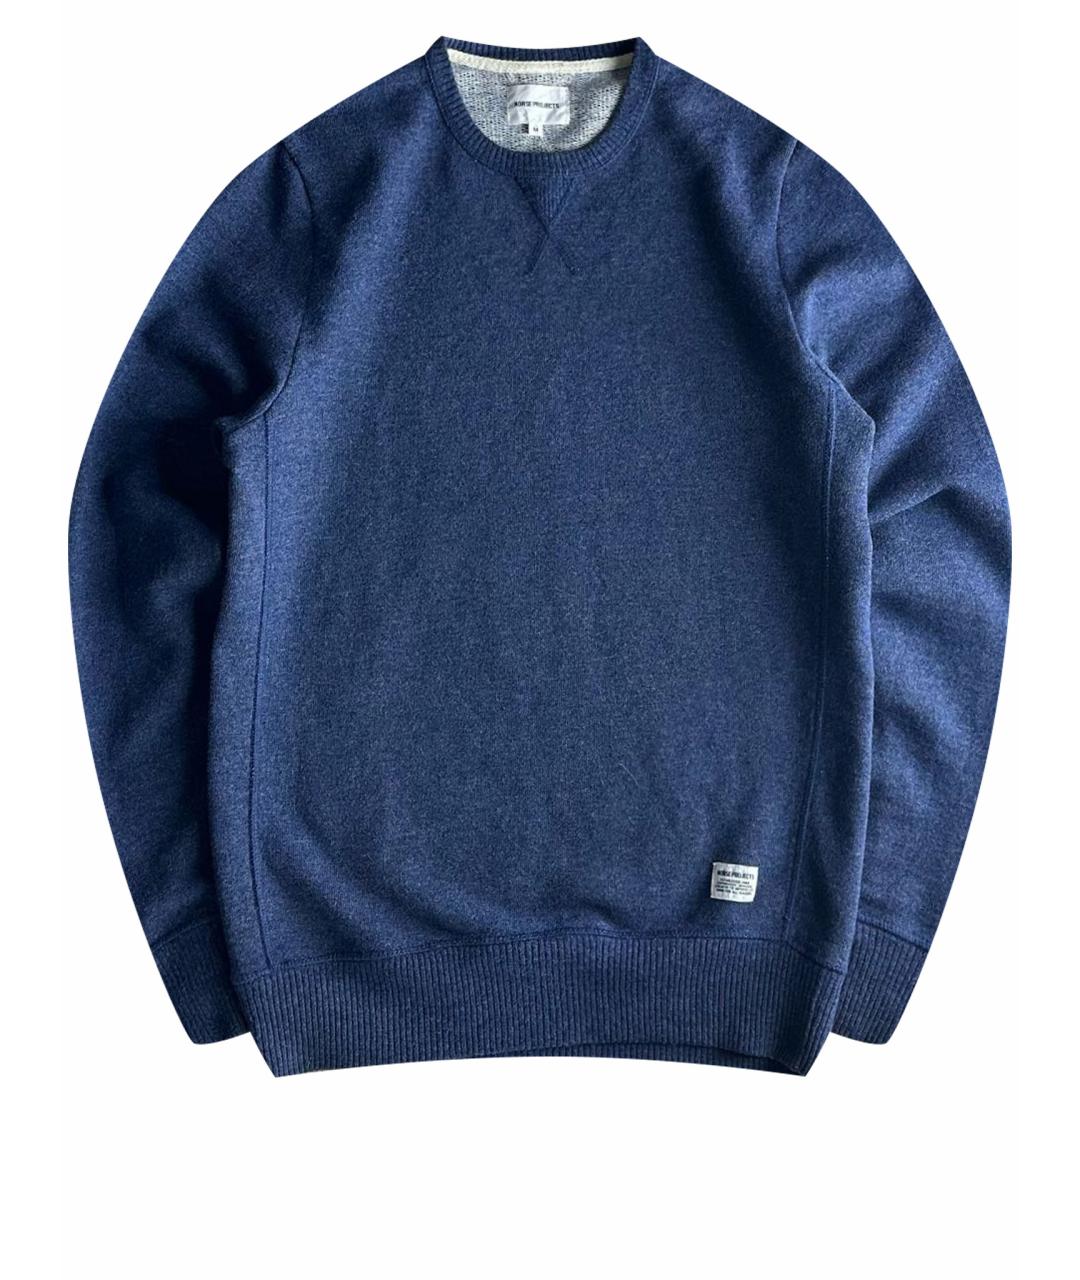 NORSE PROJECTS Темно-синий шерстяной джемпер / свитер, фото 1